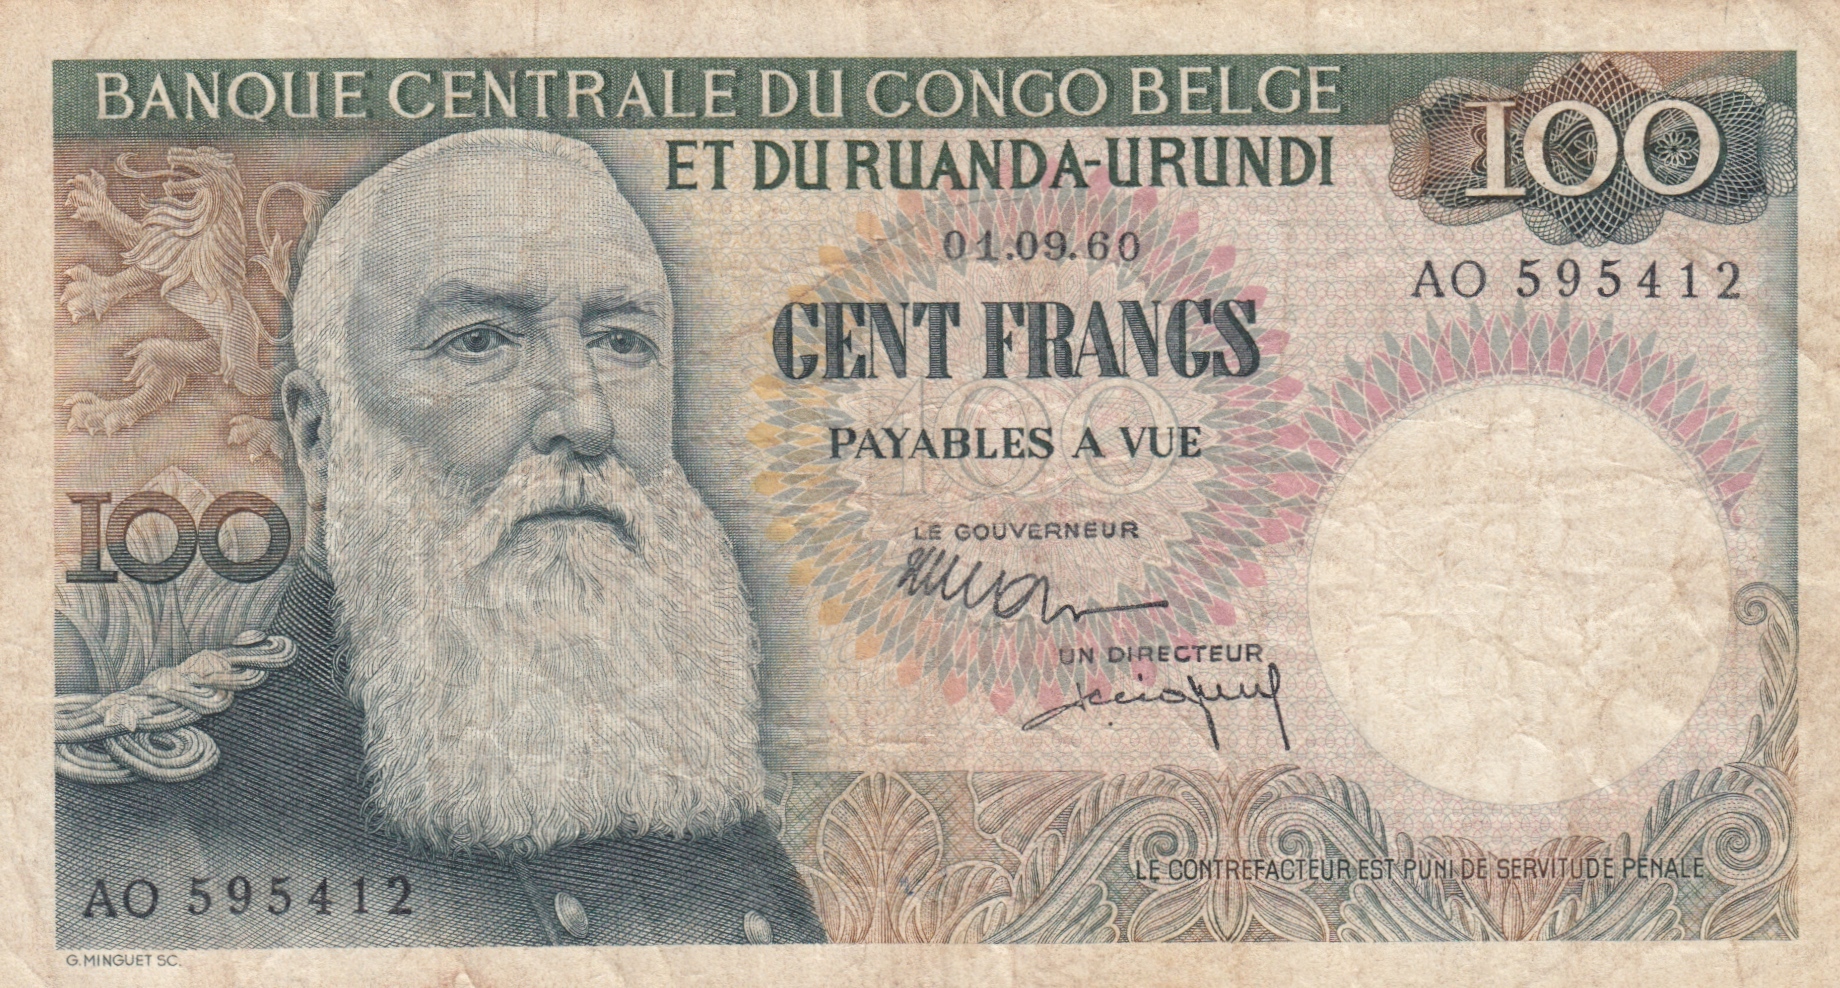 Belgian Congo Currency